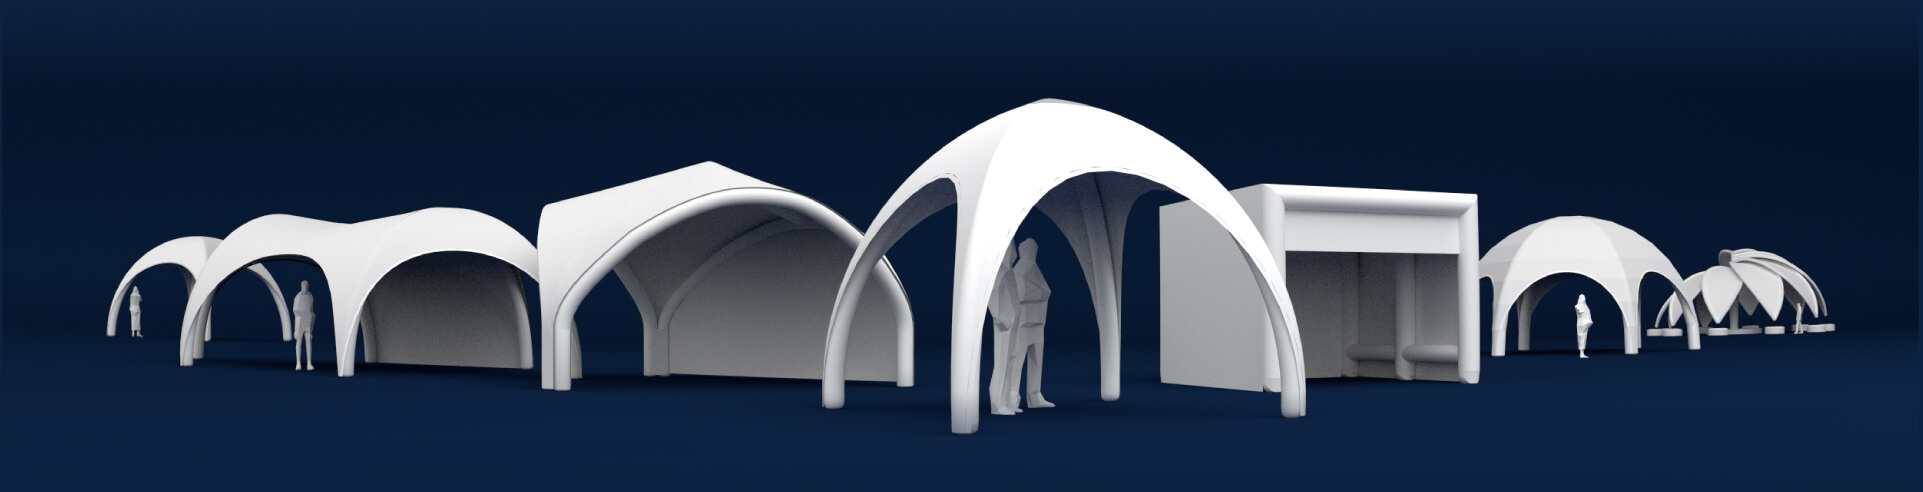 Event Tent 3d Model Free Download